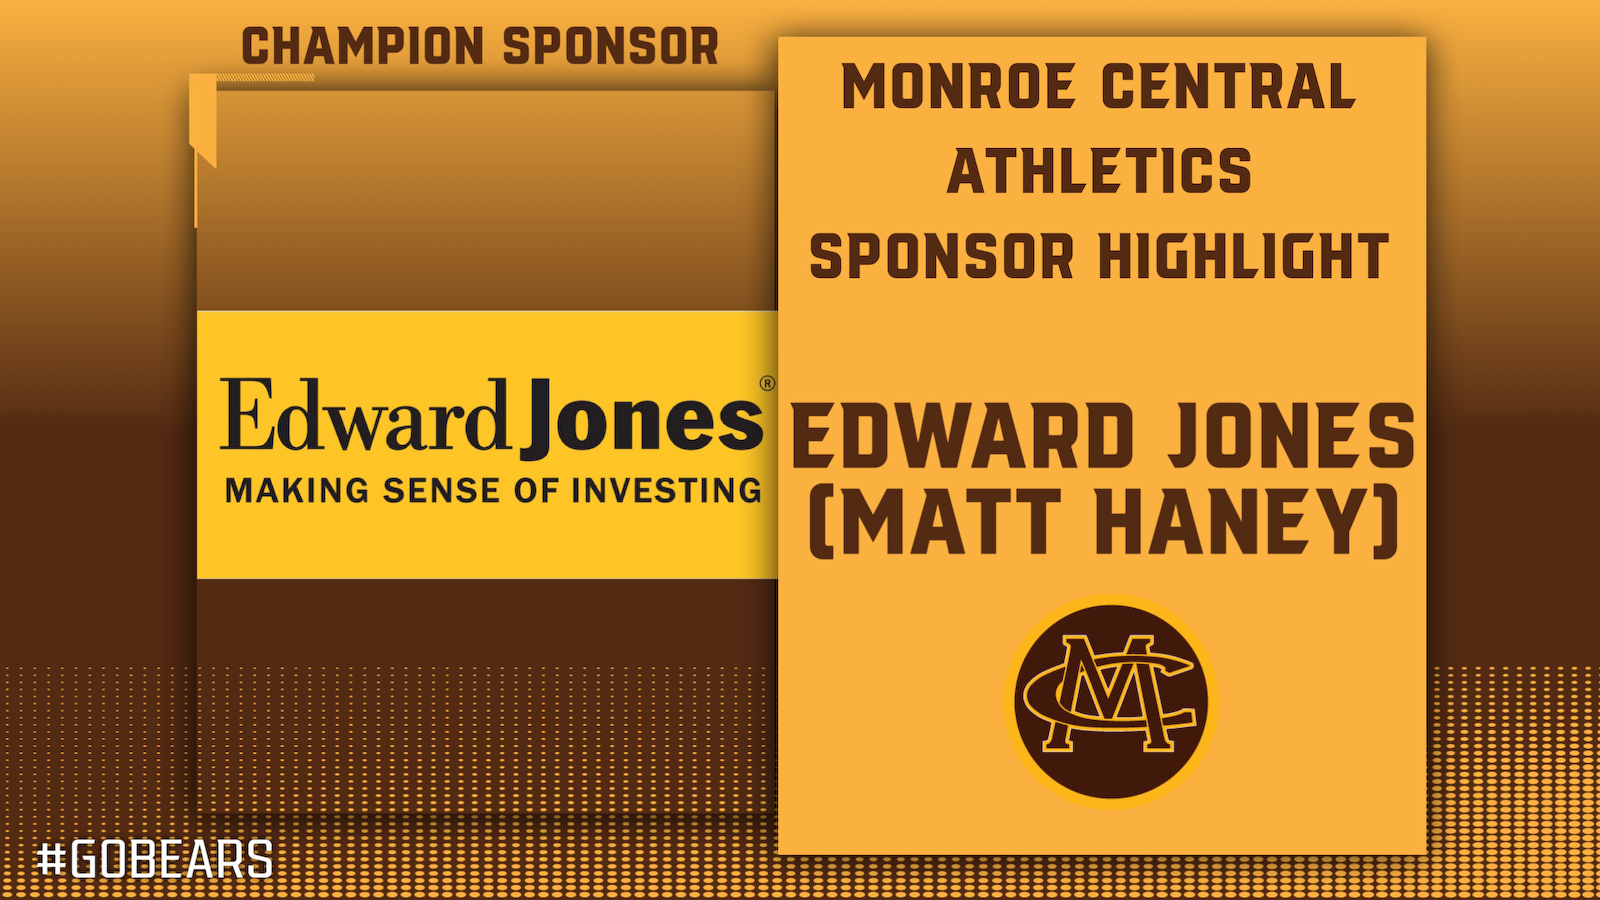 CHAMPION SPONSOR - EDWARD JONES (MATT HANEY)